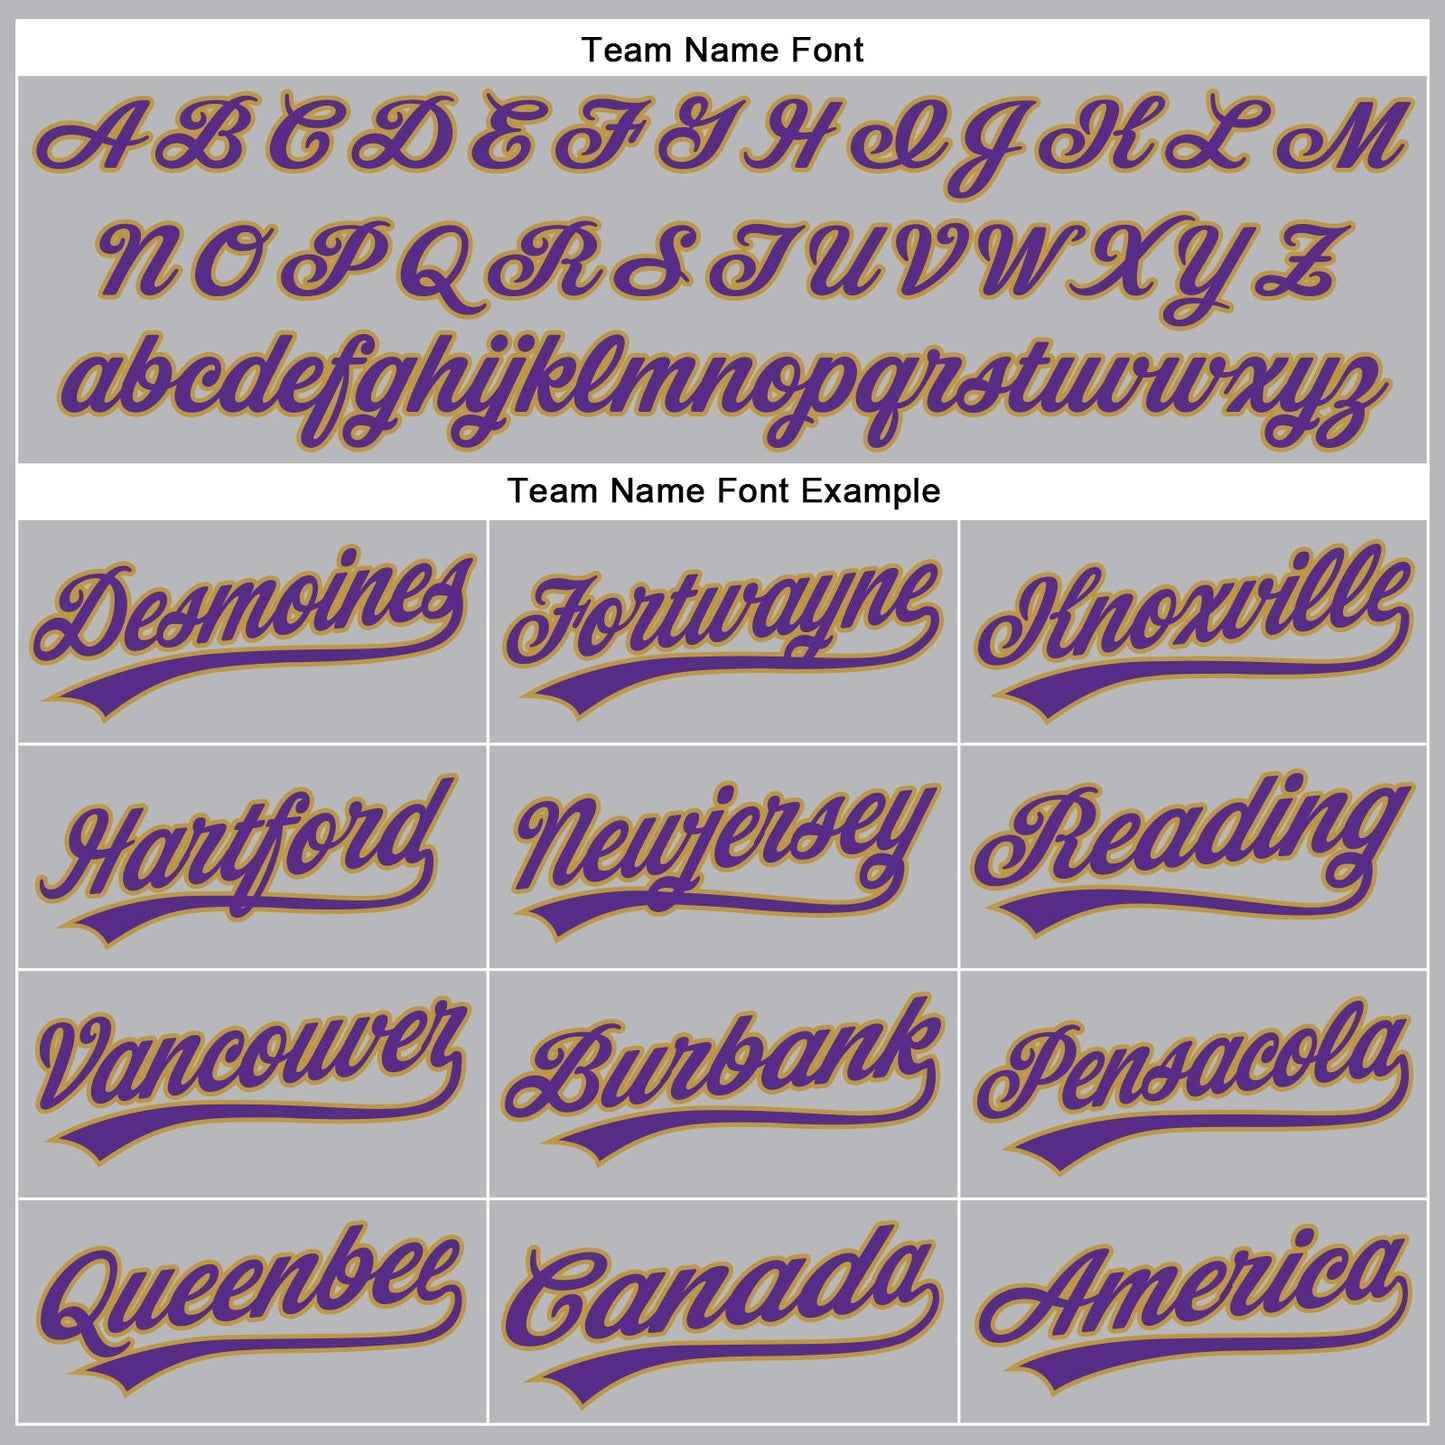 Custom Gray Purple Pinstripe Old Gold Authentic Baseball Jersey